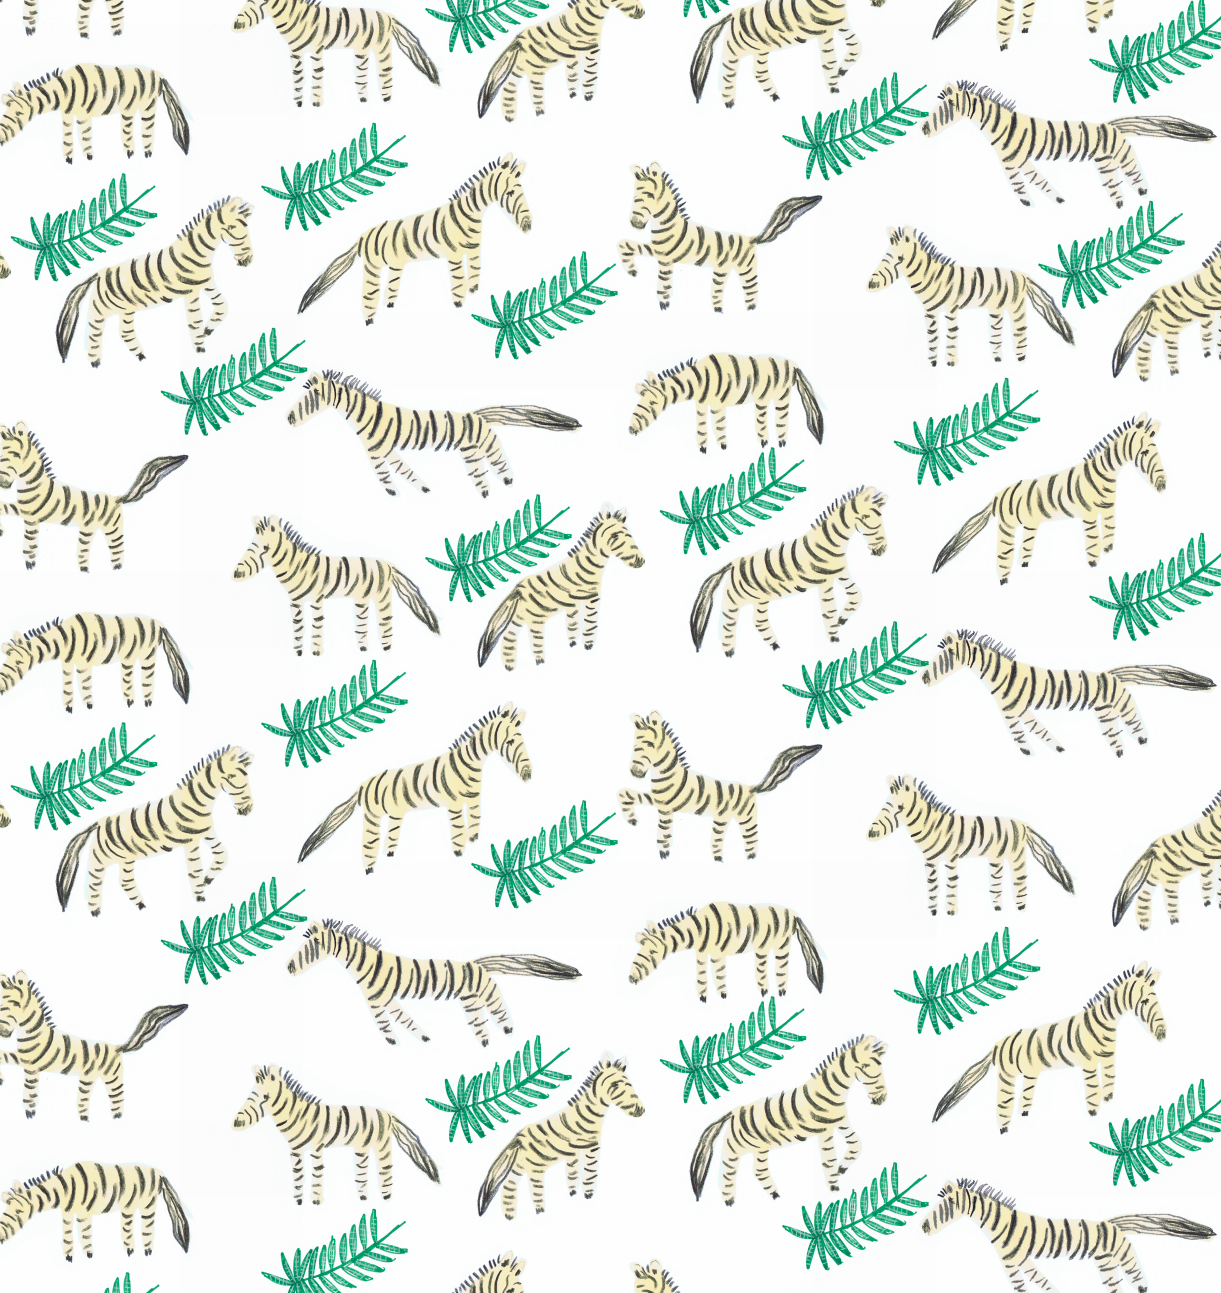 zebras_in_the_jungle